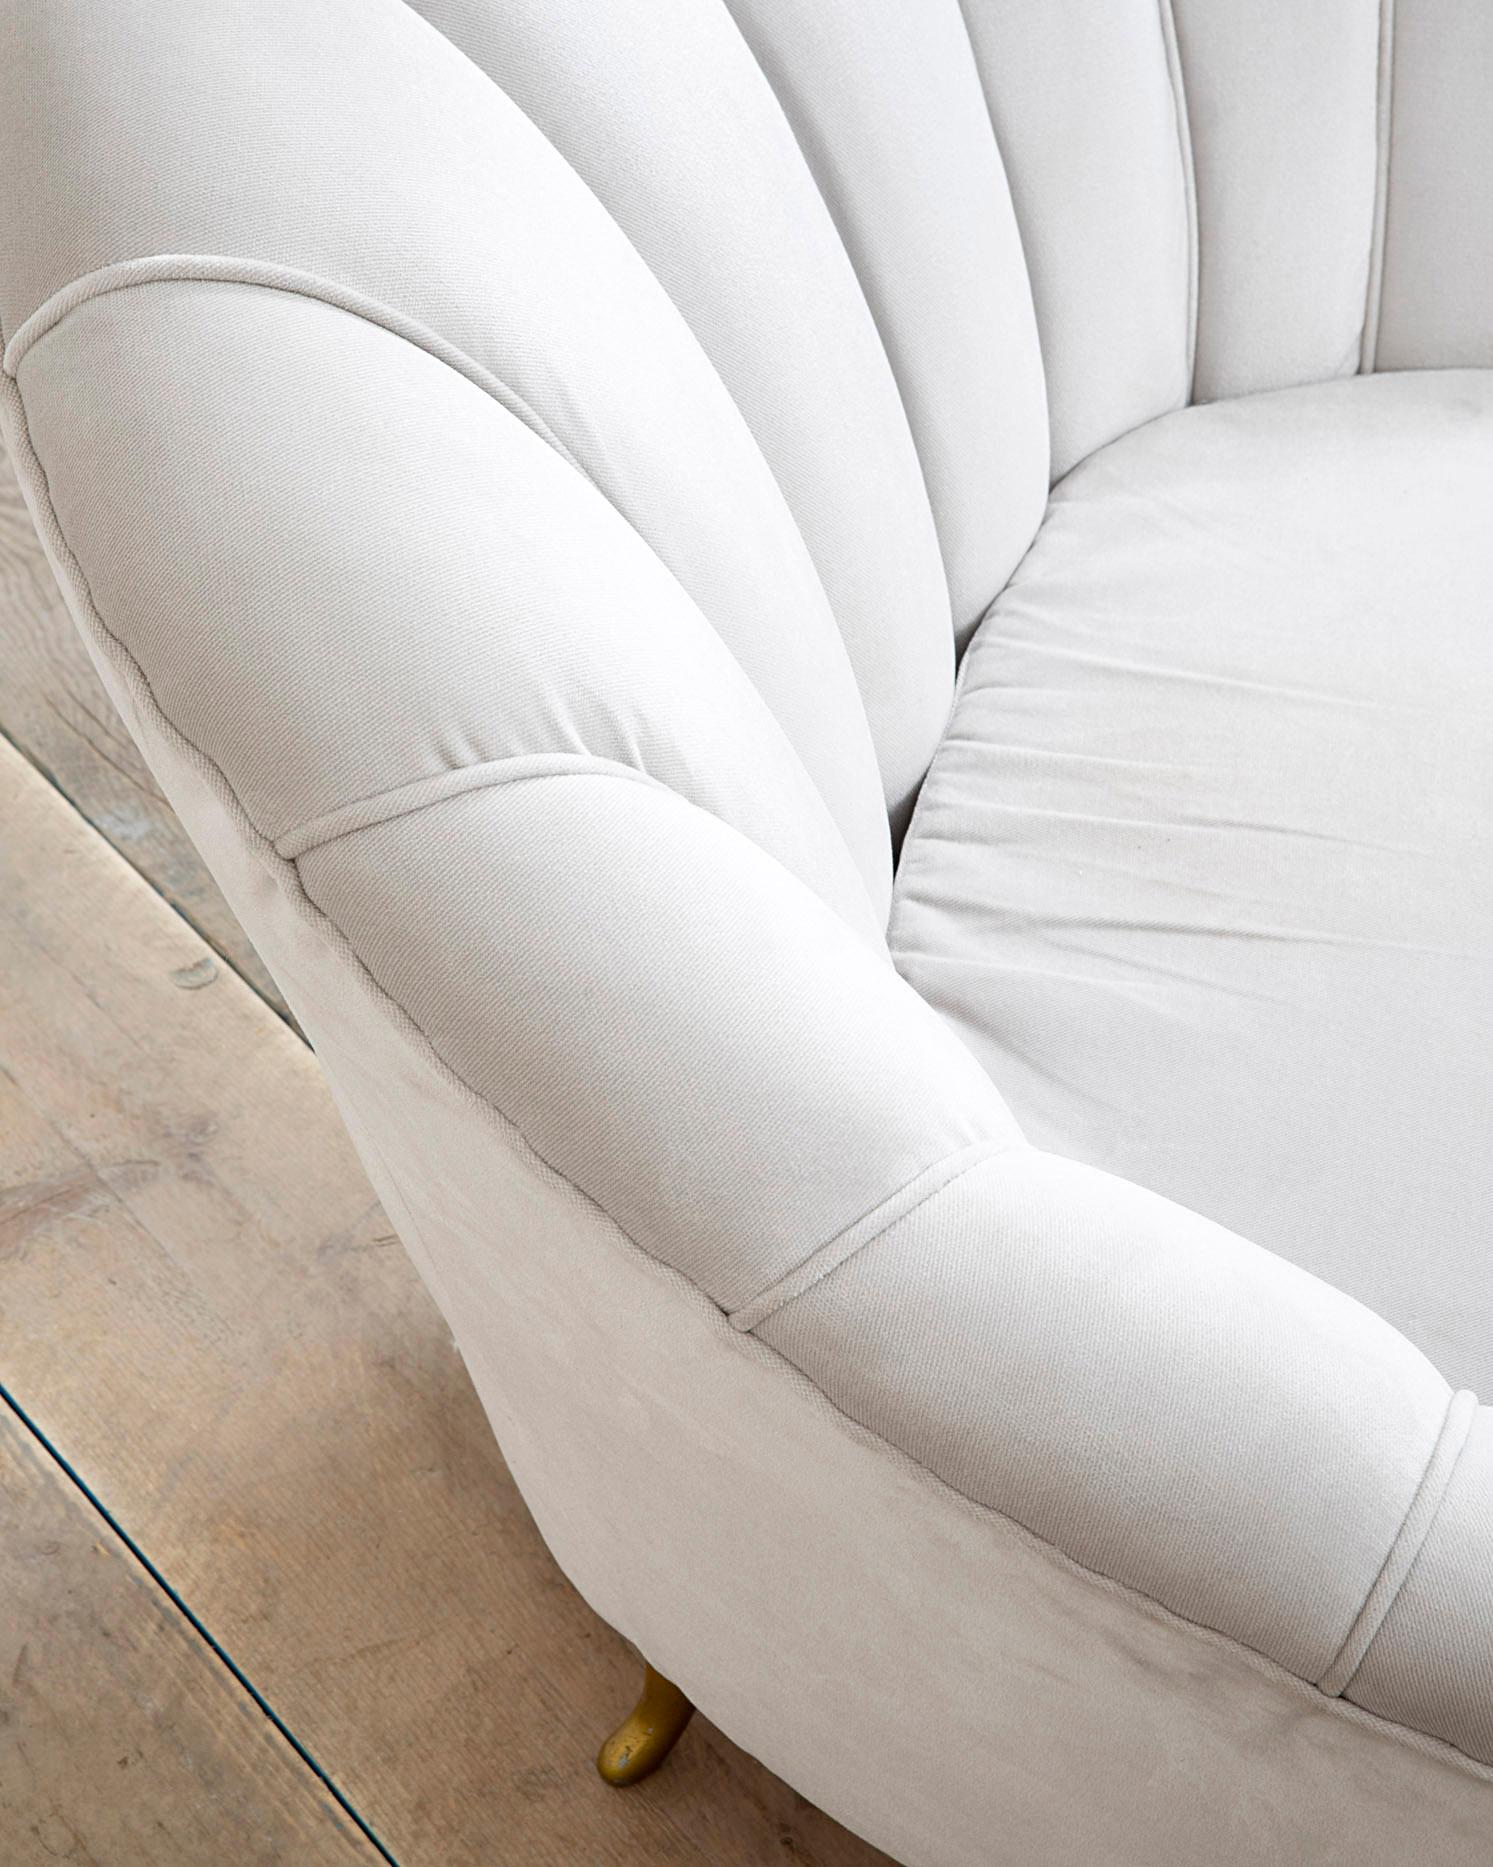 Italian 20th Century Gio Ponti Pair of Armchairs by ISA Bergamo 50s White Upholstery For Sale